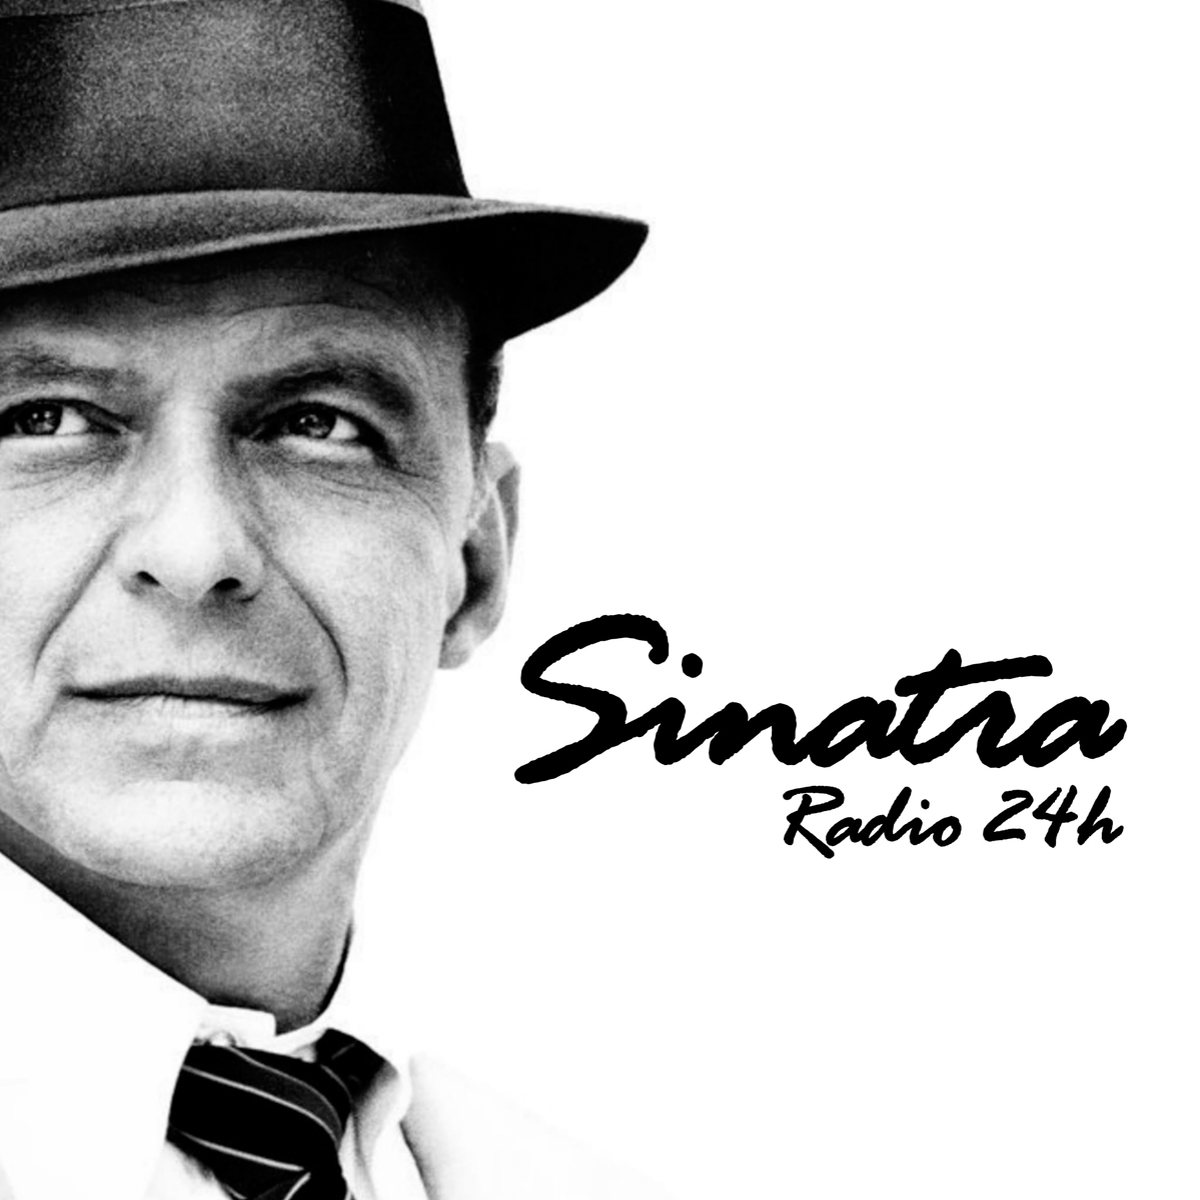 Frank Sinatra Radio 24h